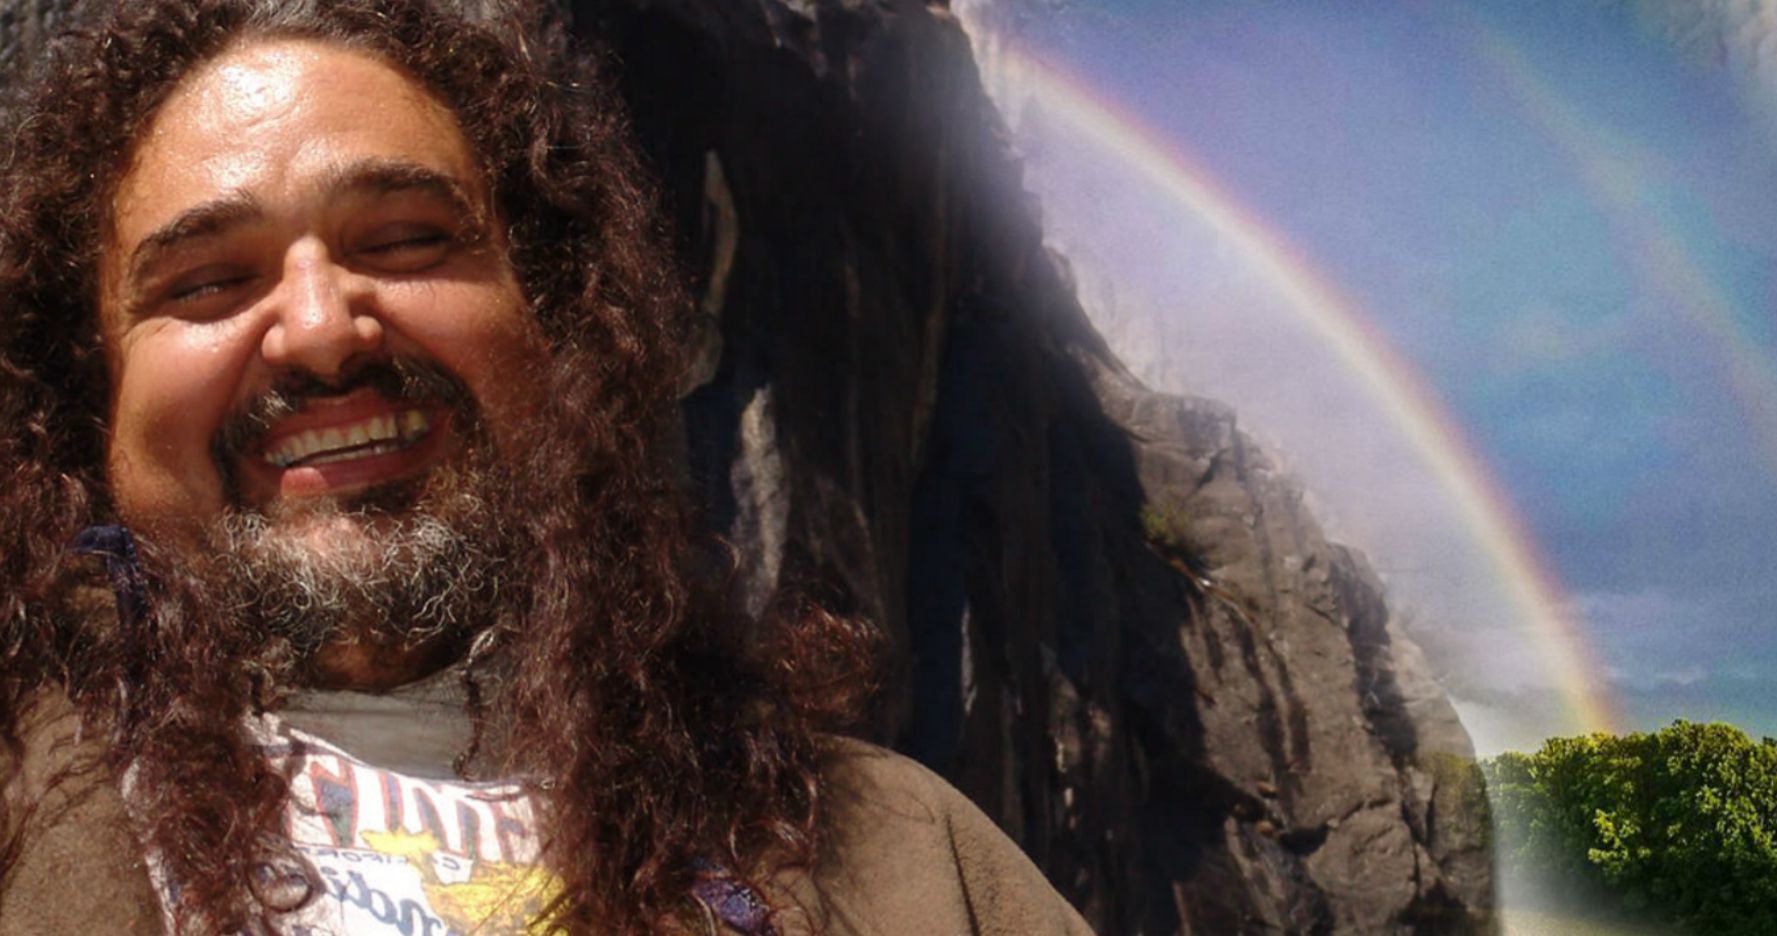 Double Rainbow Guy Dies, Paul 'Bear' Vasquez Was 57